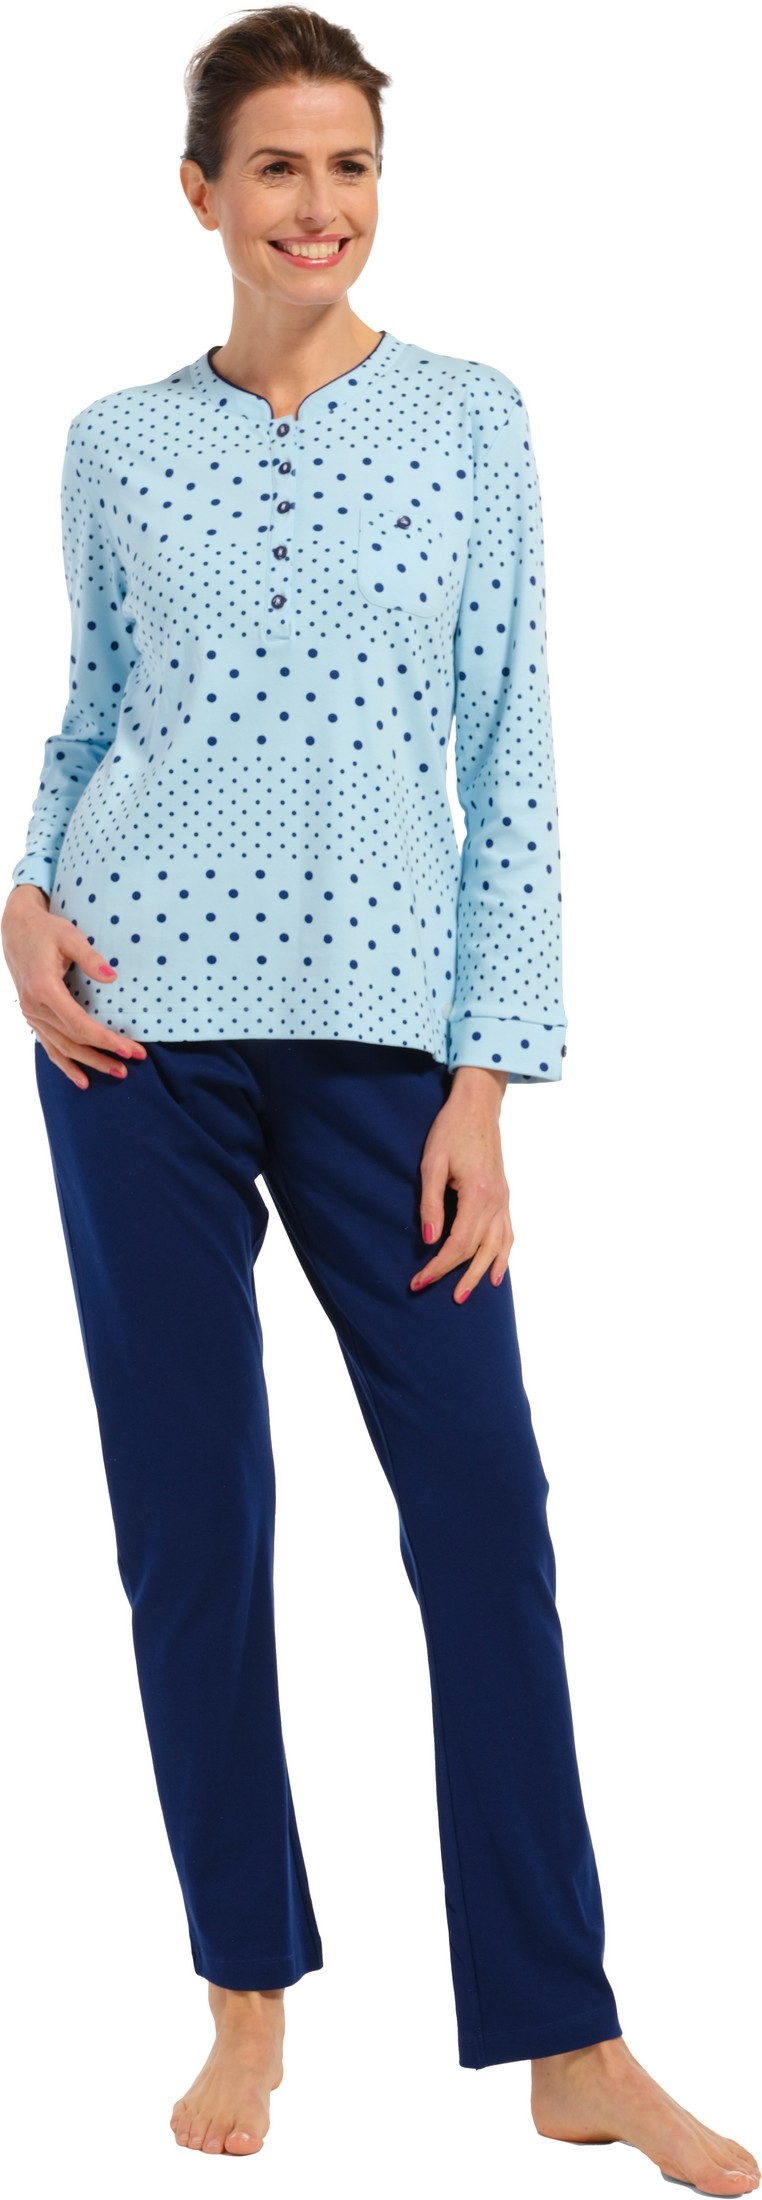 Pastunette dames pyjama 20232-162-4 - Blauw - 42